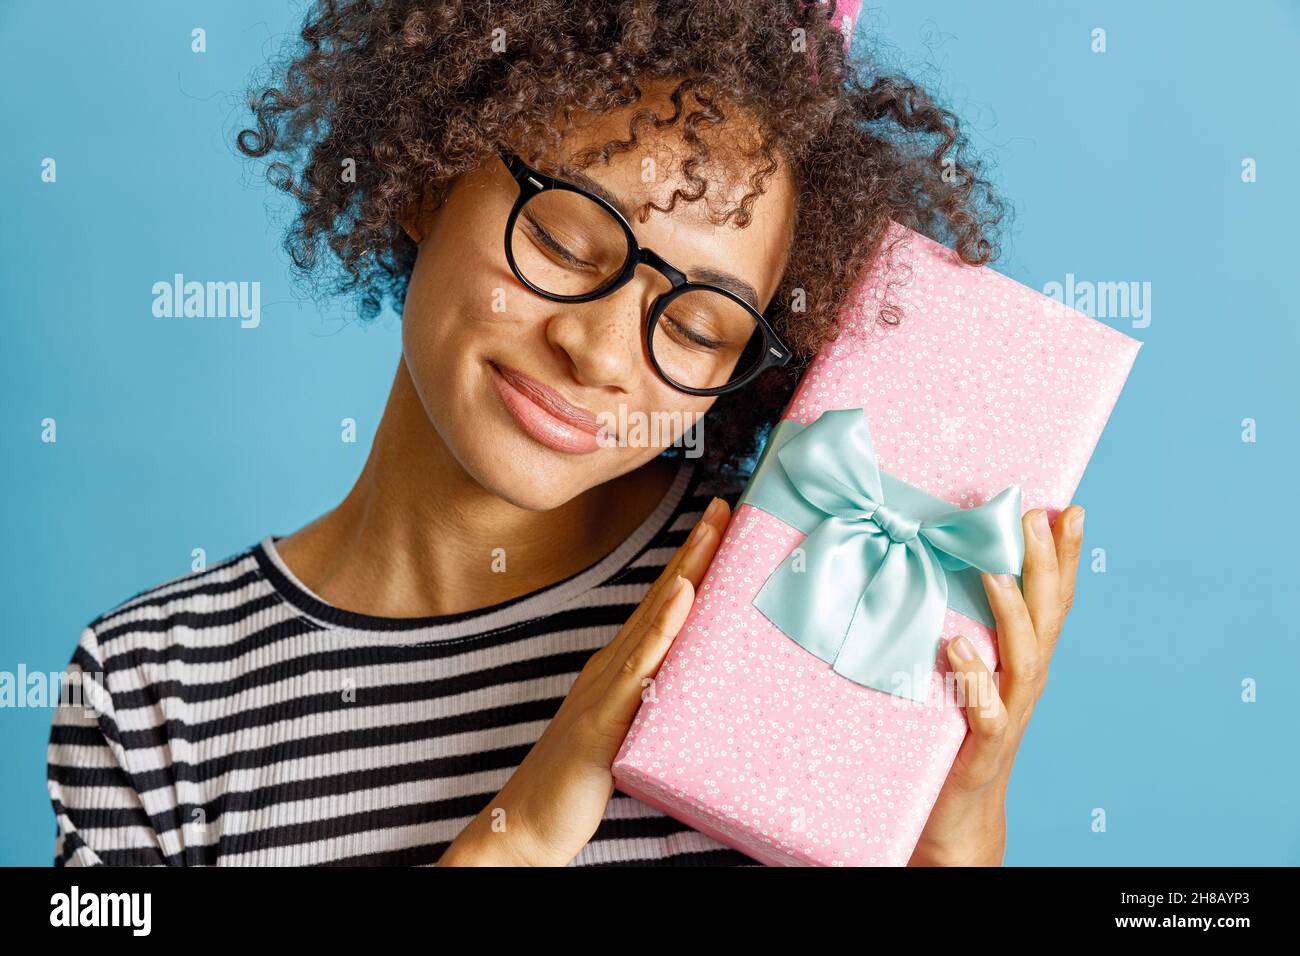 Joyful African woman holding gift box with ribbon Stock Photo